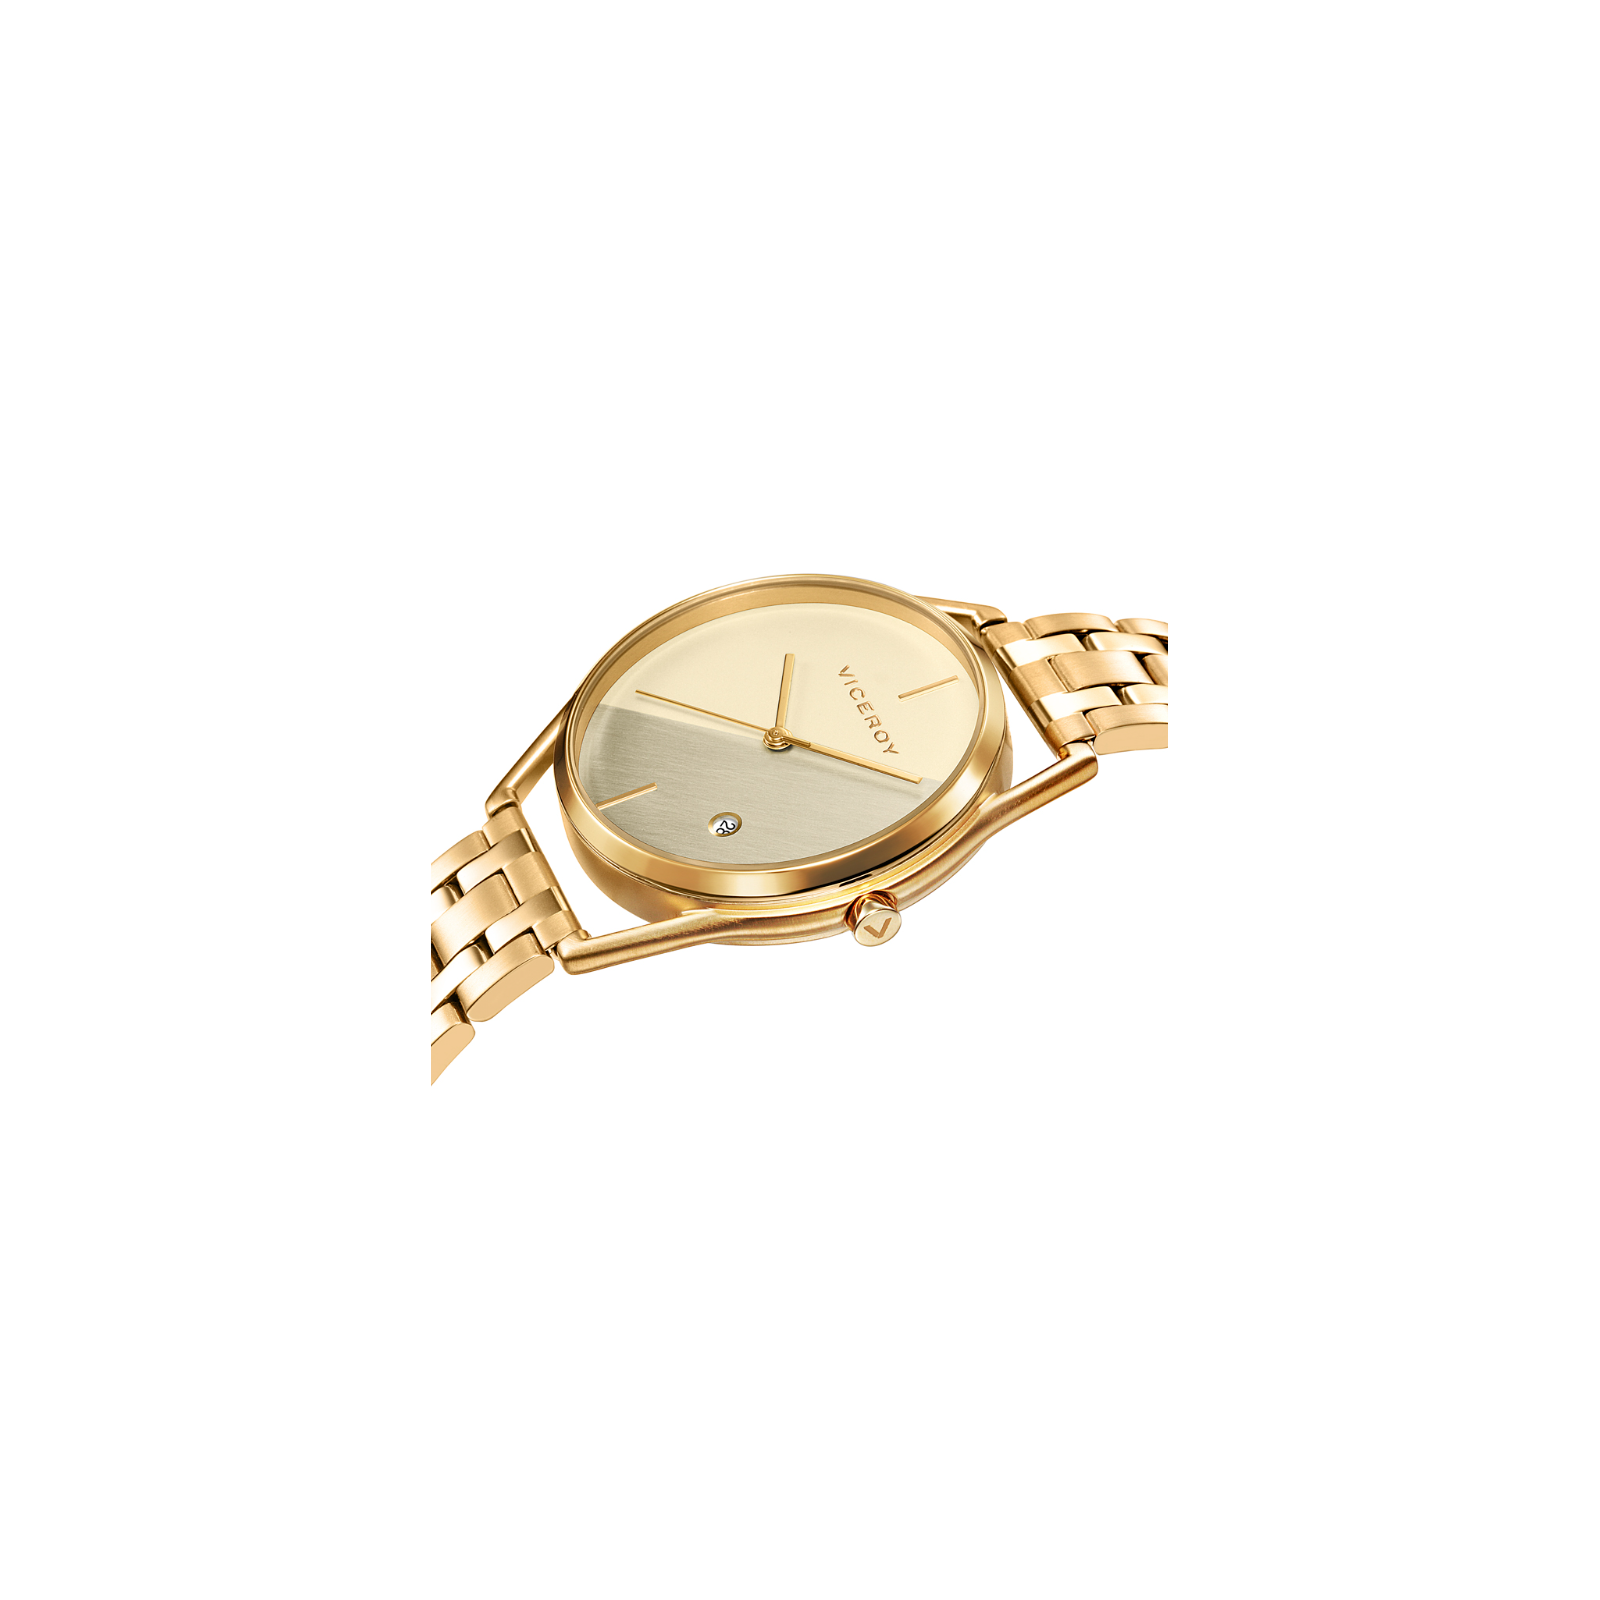 Reloj Viceroy dorado 42394-97 mujer